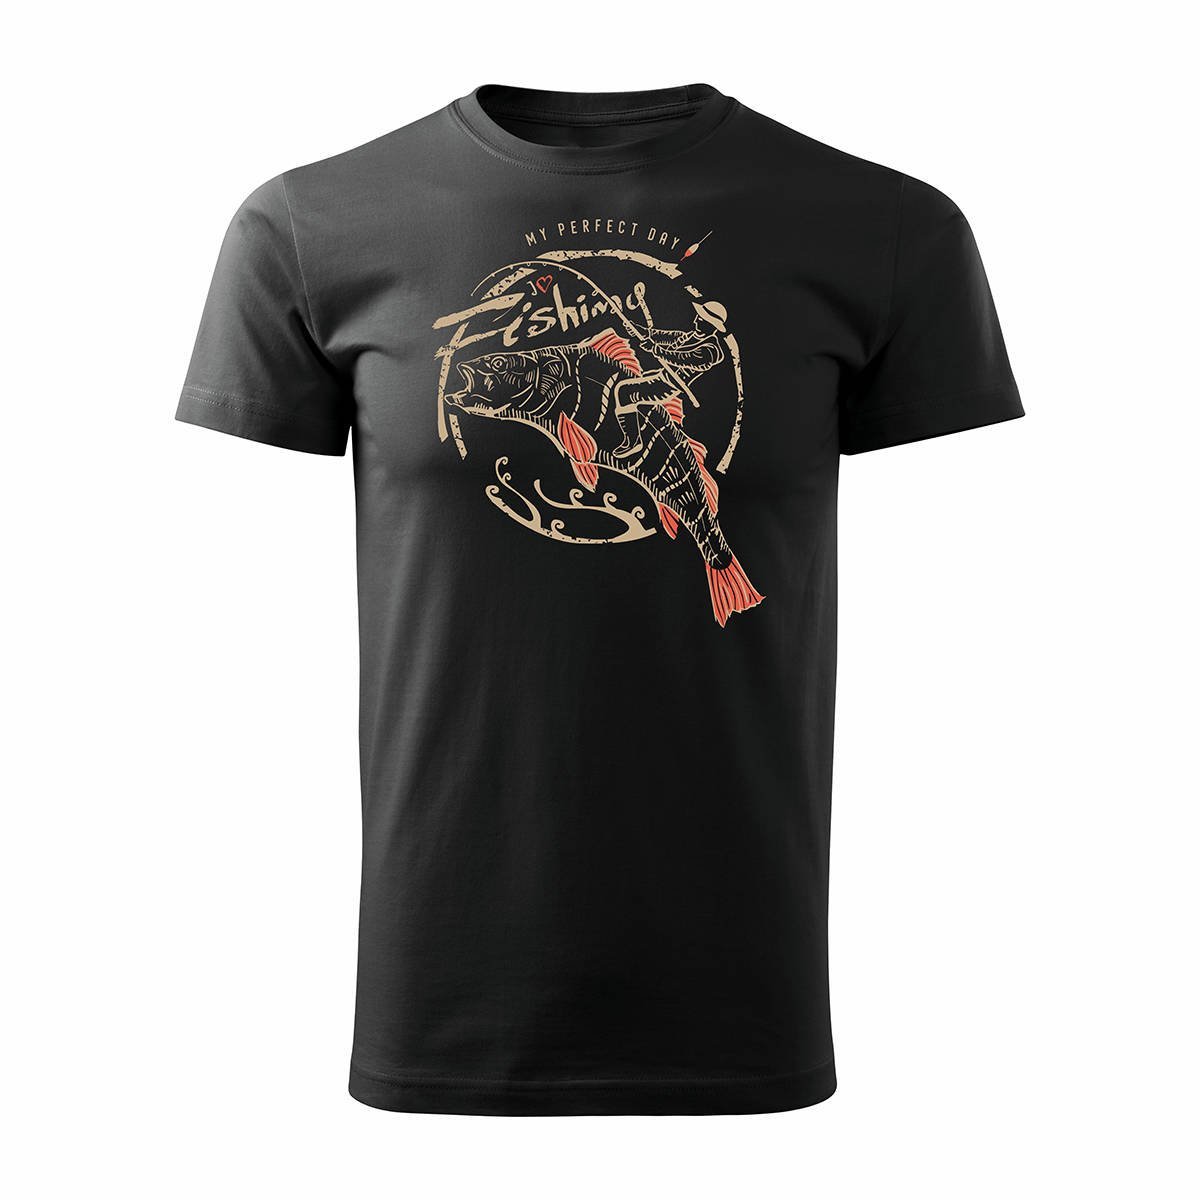 Topslang, Koszulka męska dla wędkarza wędkarska fishing, czarna, regular, rozmiar XL